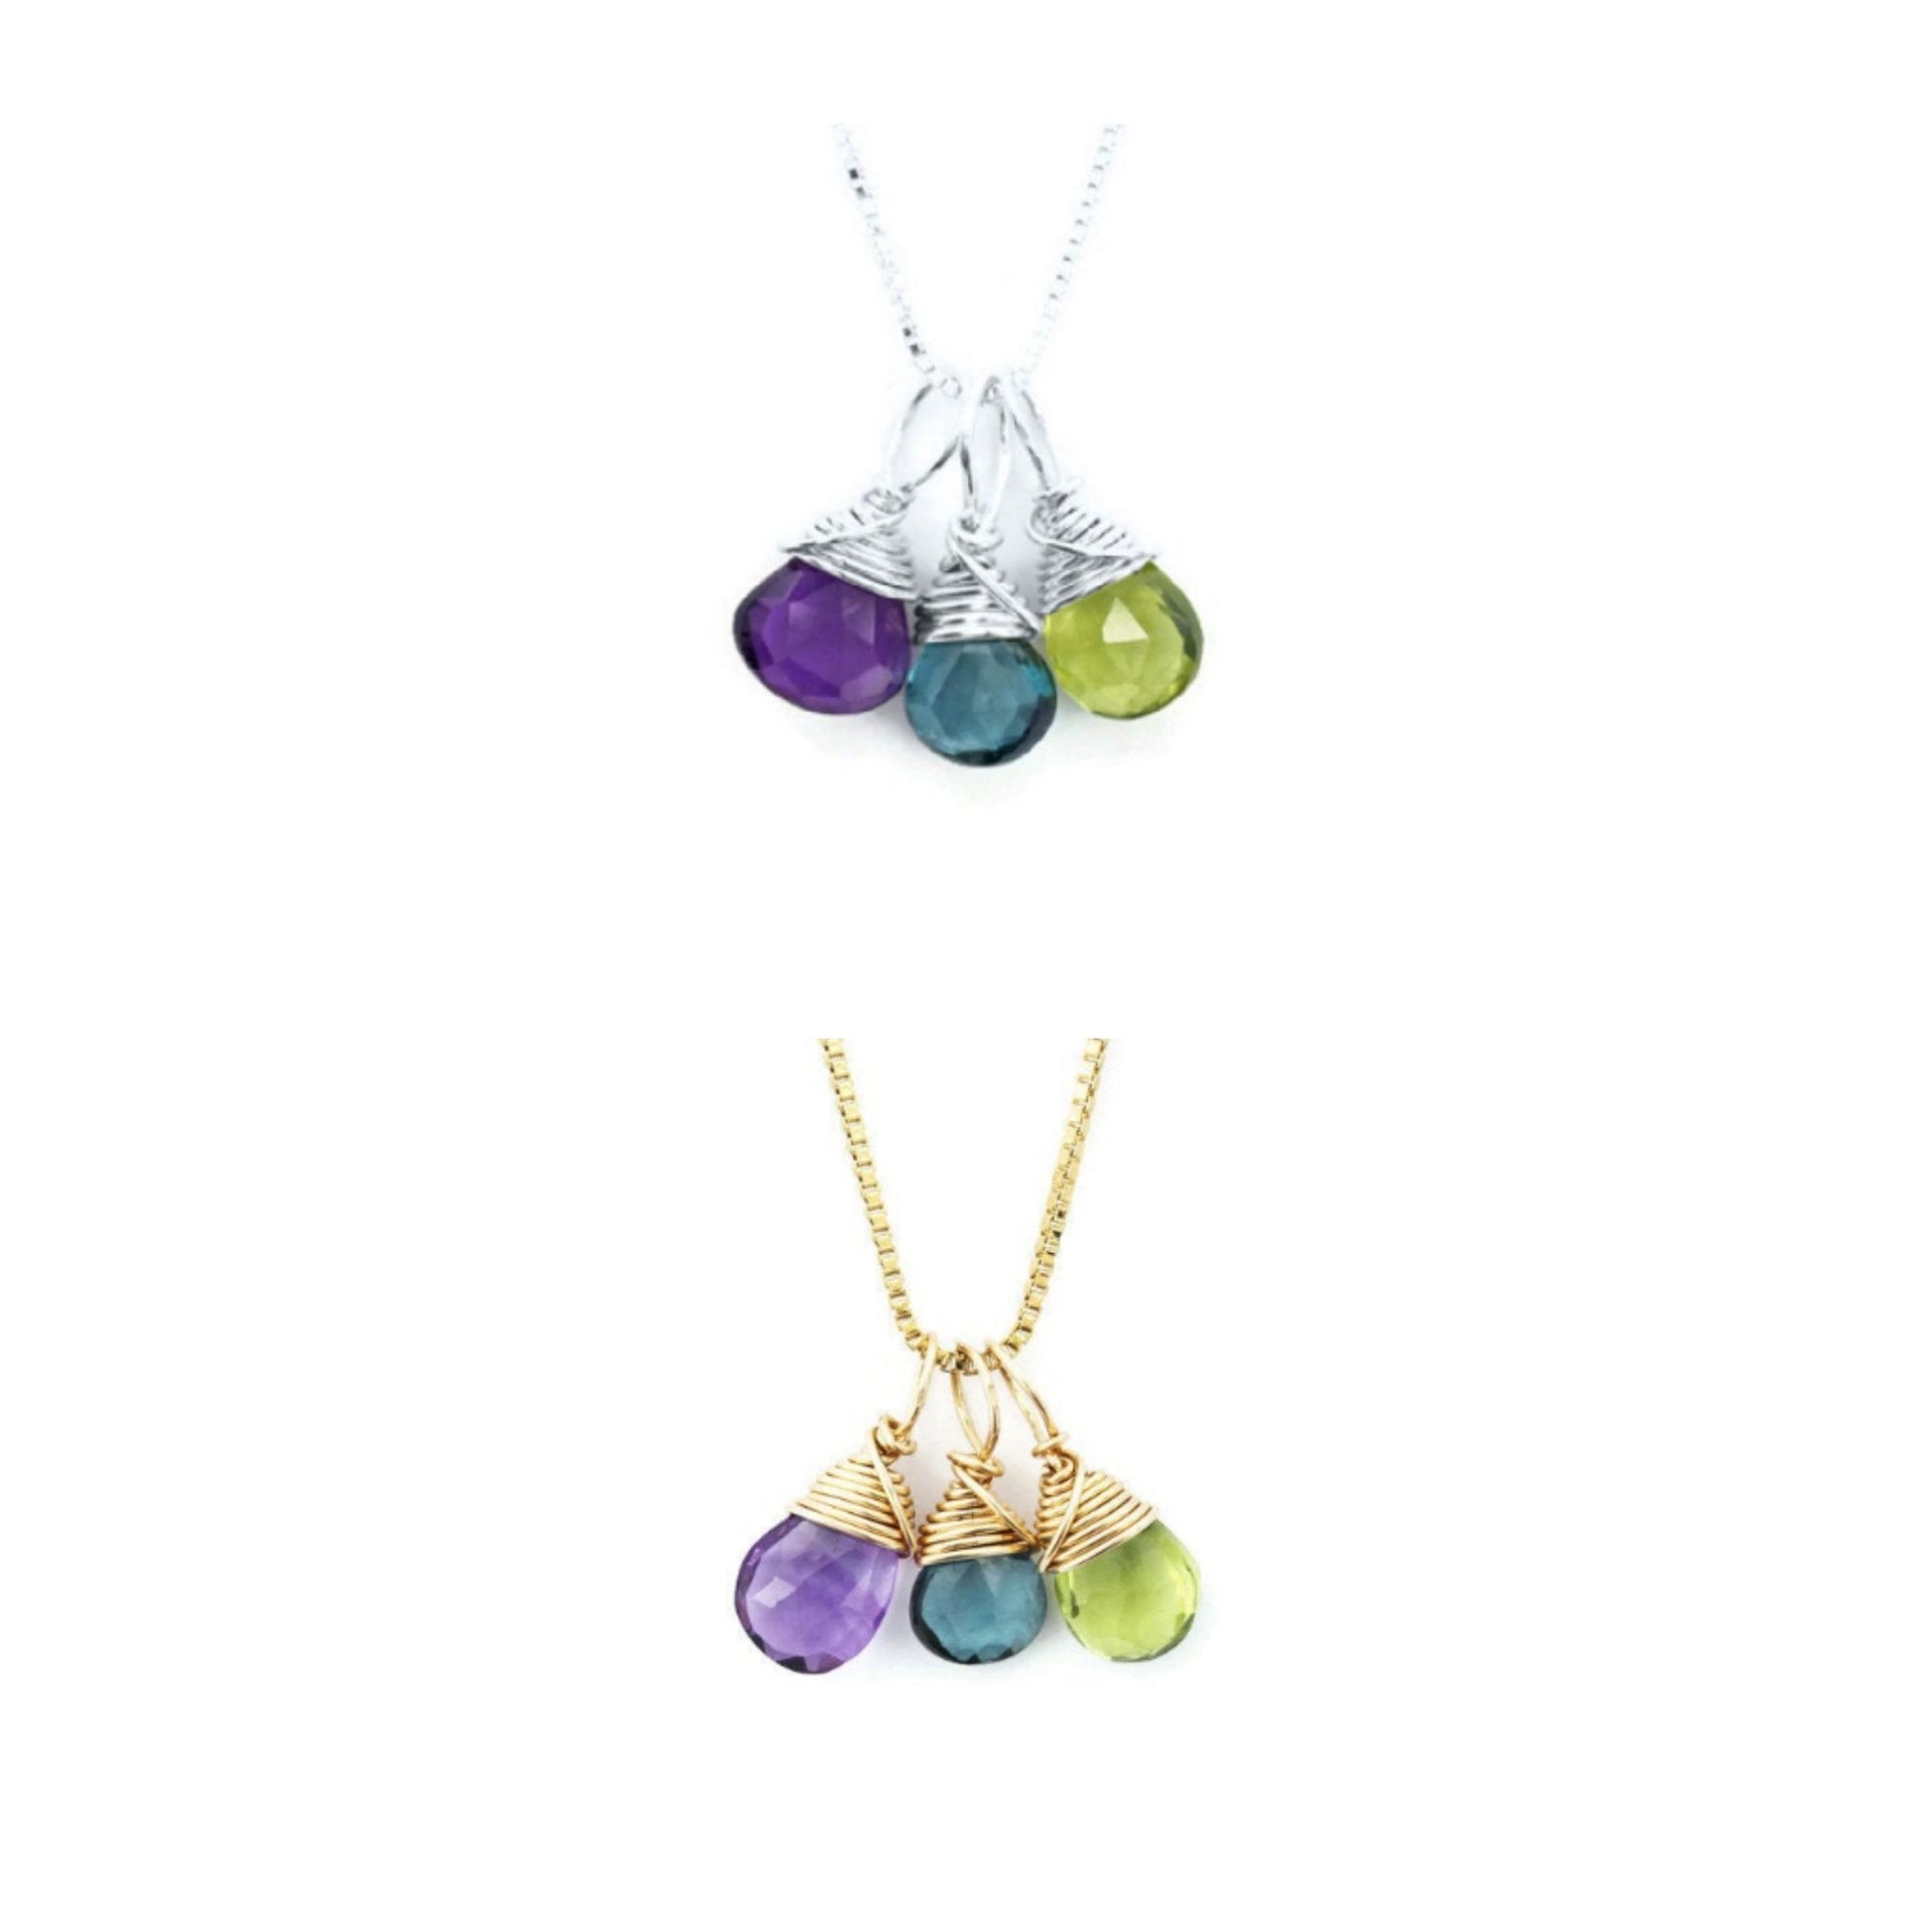 3 birthstone mom necklace by Jen Lesea Designs